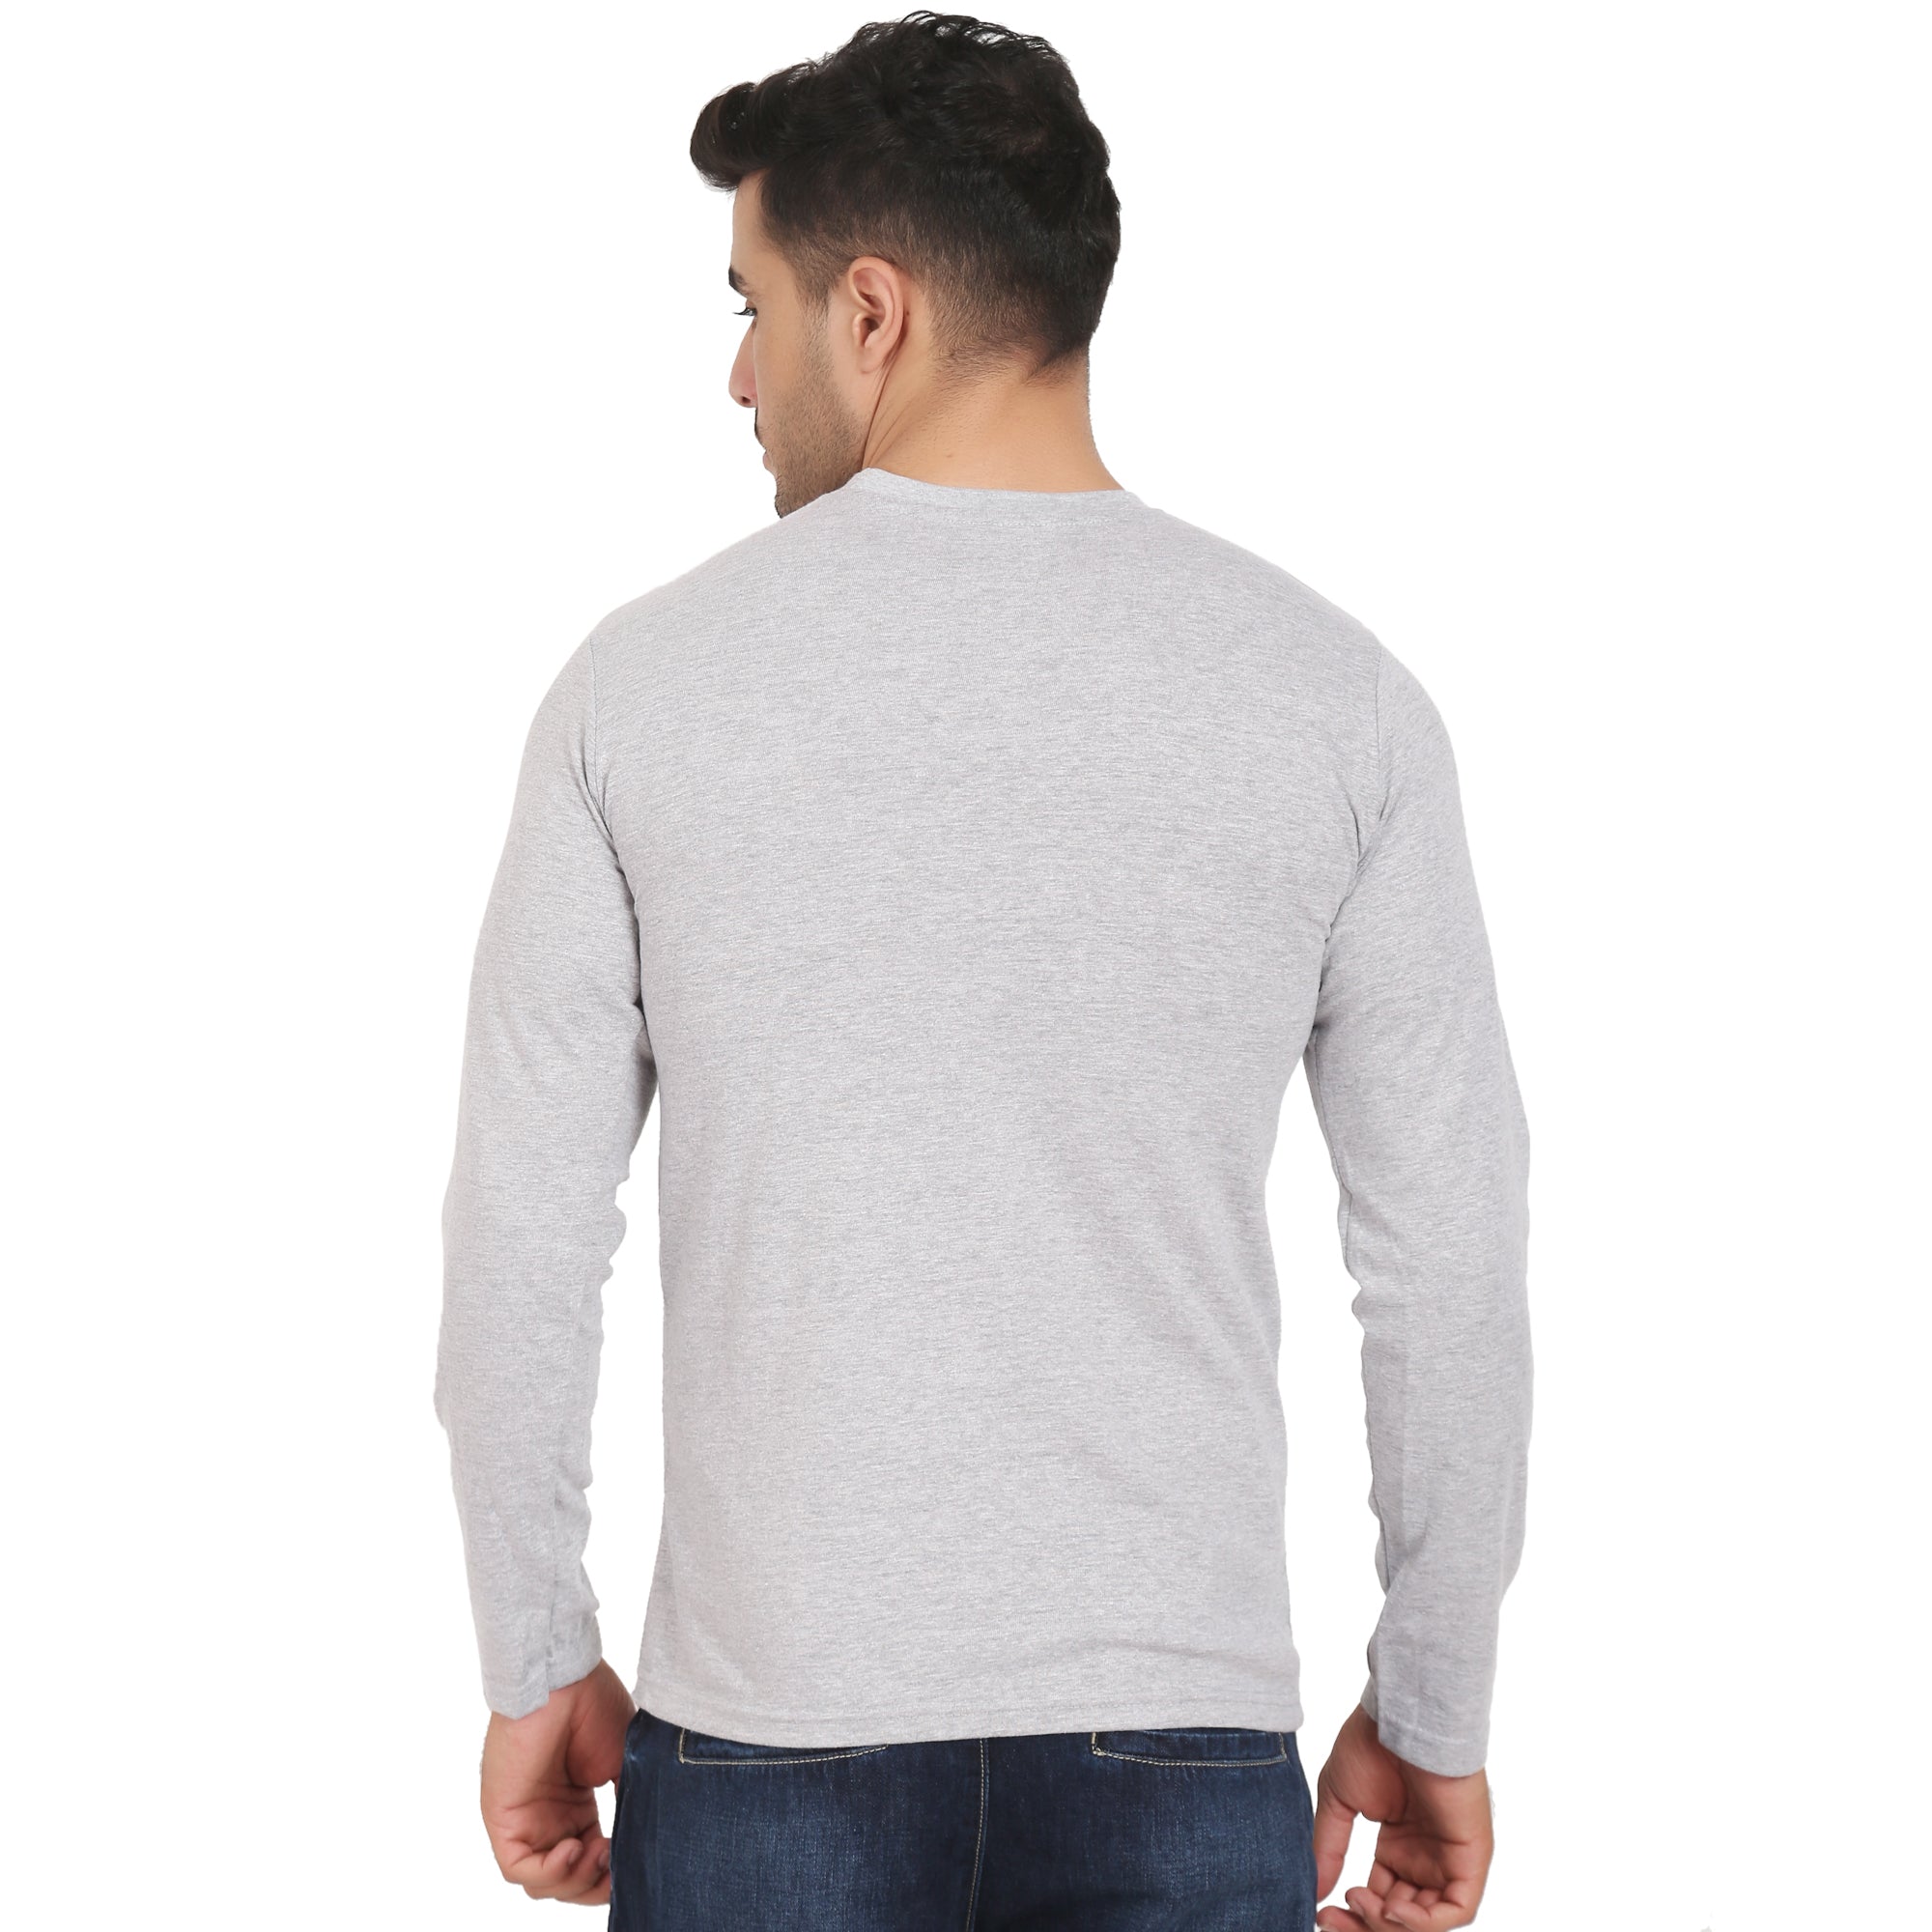 Men Crew Neck Cotton T-Shirts - Full Sleeves, Light Grey Colour